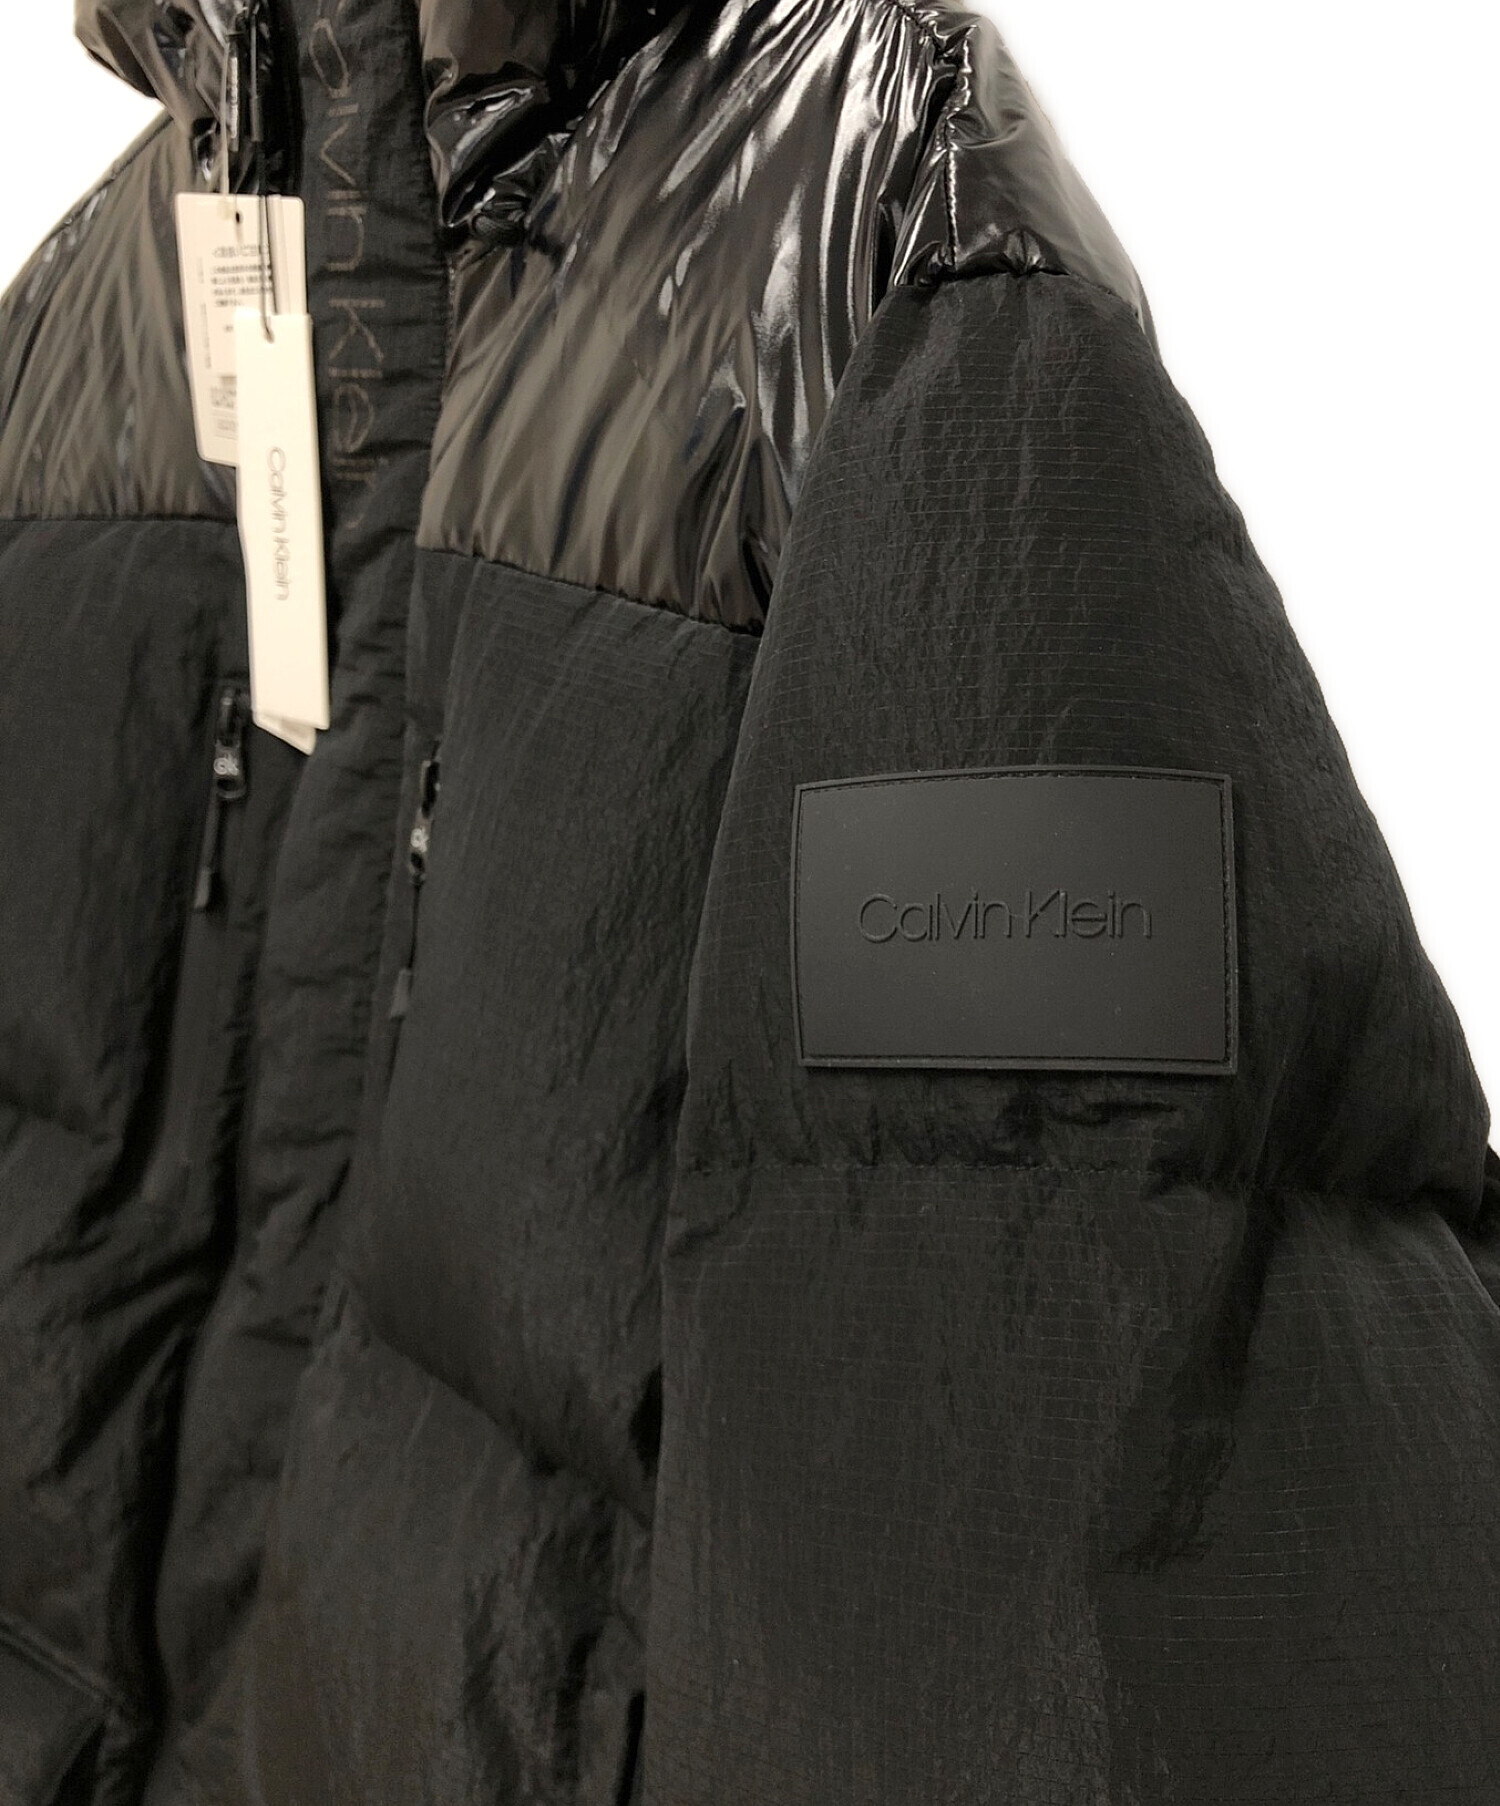 Calvin Klein (カルバンクライン) ダウンジャケット ブラック サイズ:SIZE M